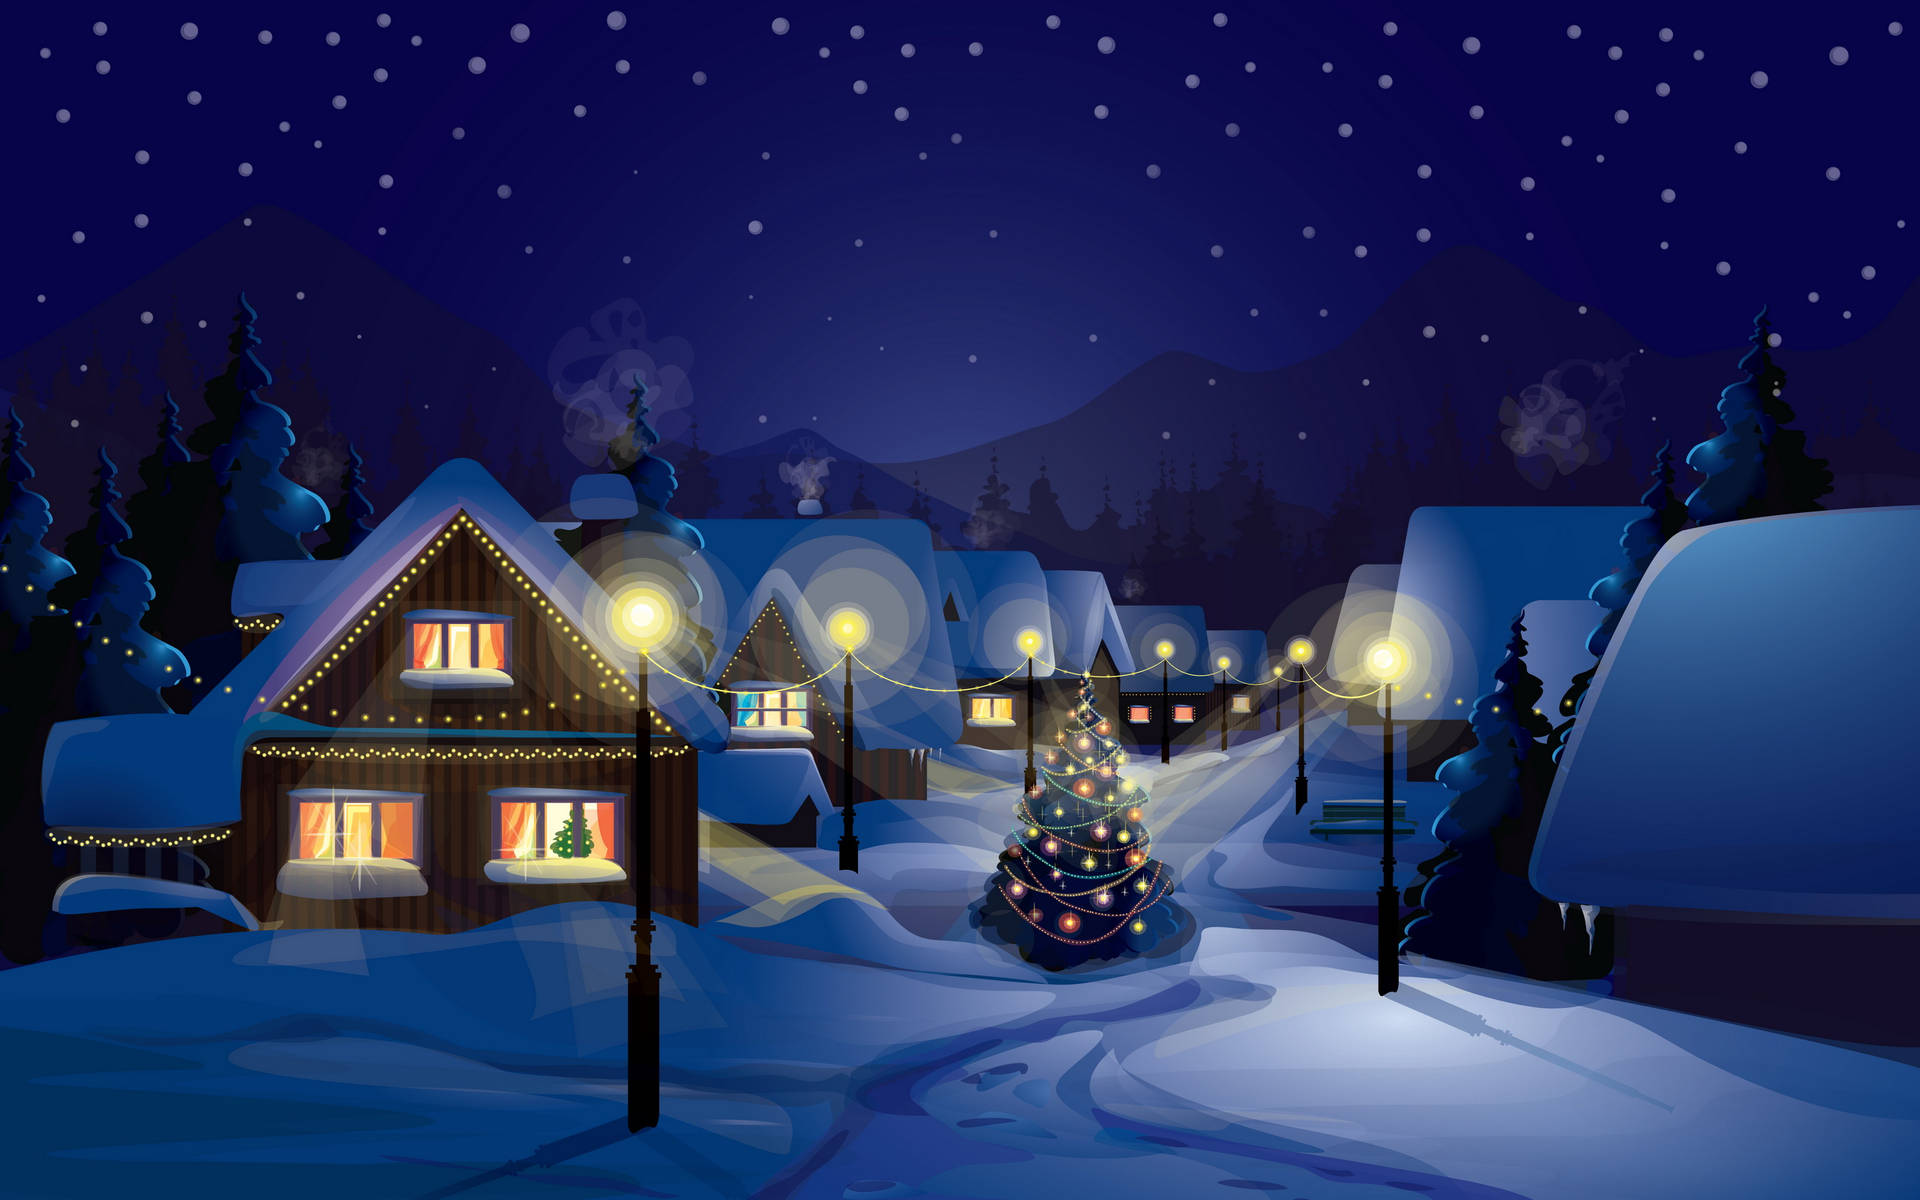 Snowy Village Christmas Holiday Desktop Background